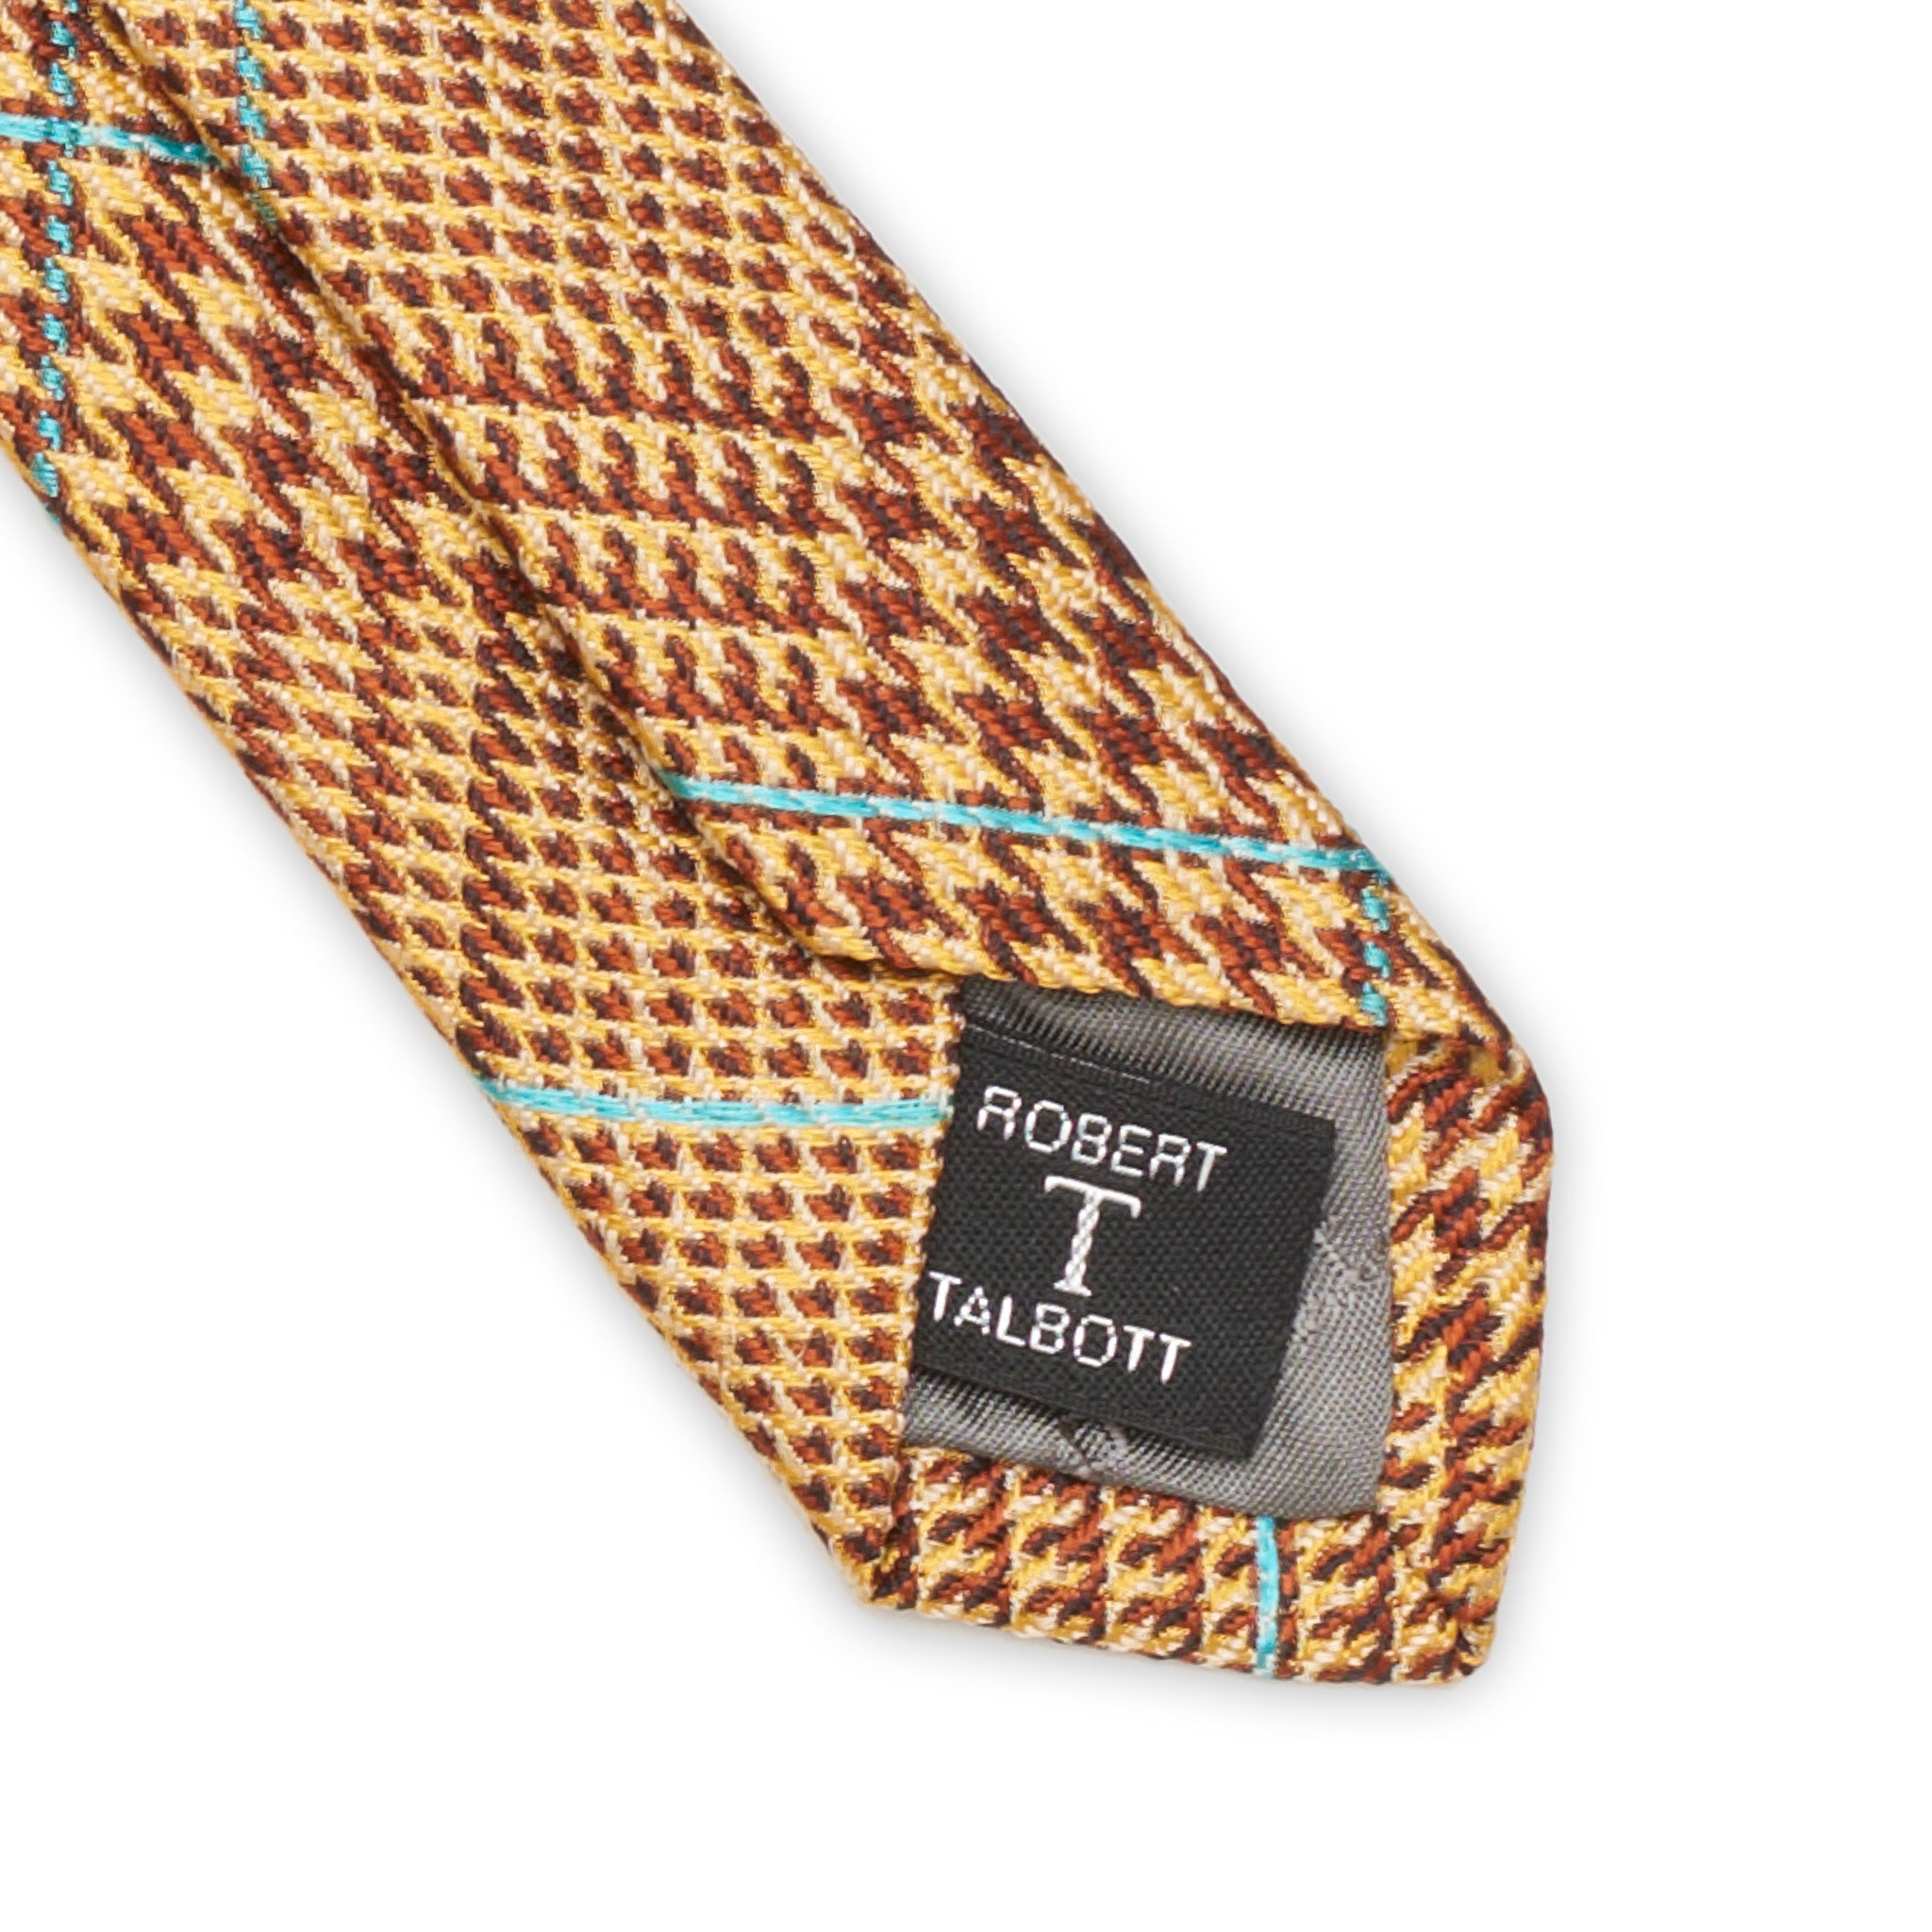 ROBERT TALBOTT Best of Class Handmade Prince of Wales Design Silk Tie NEW